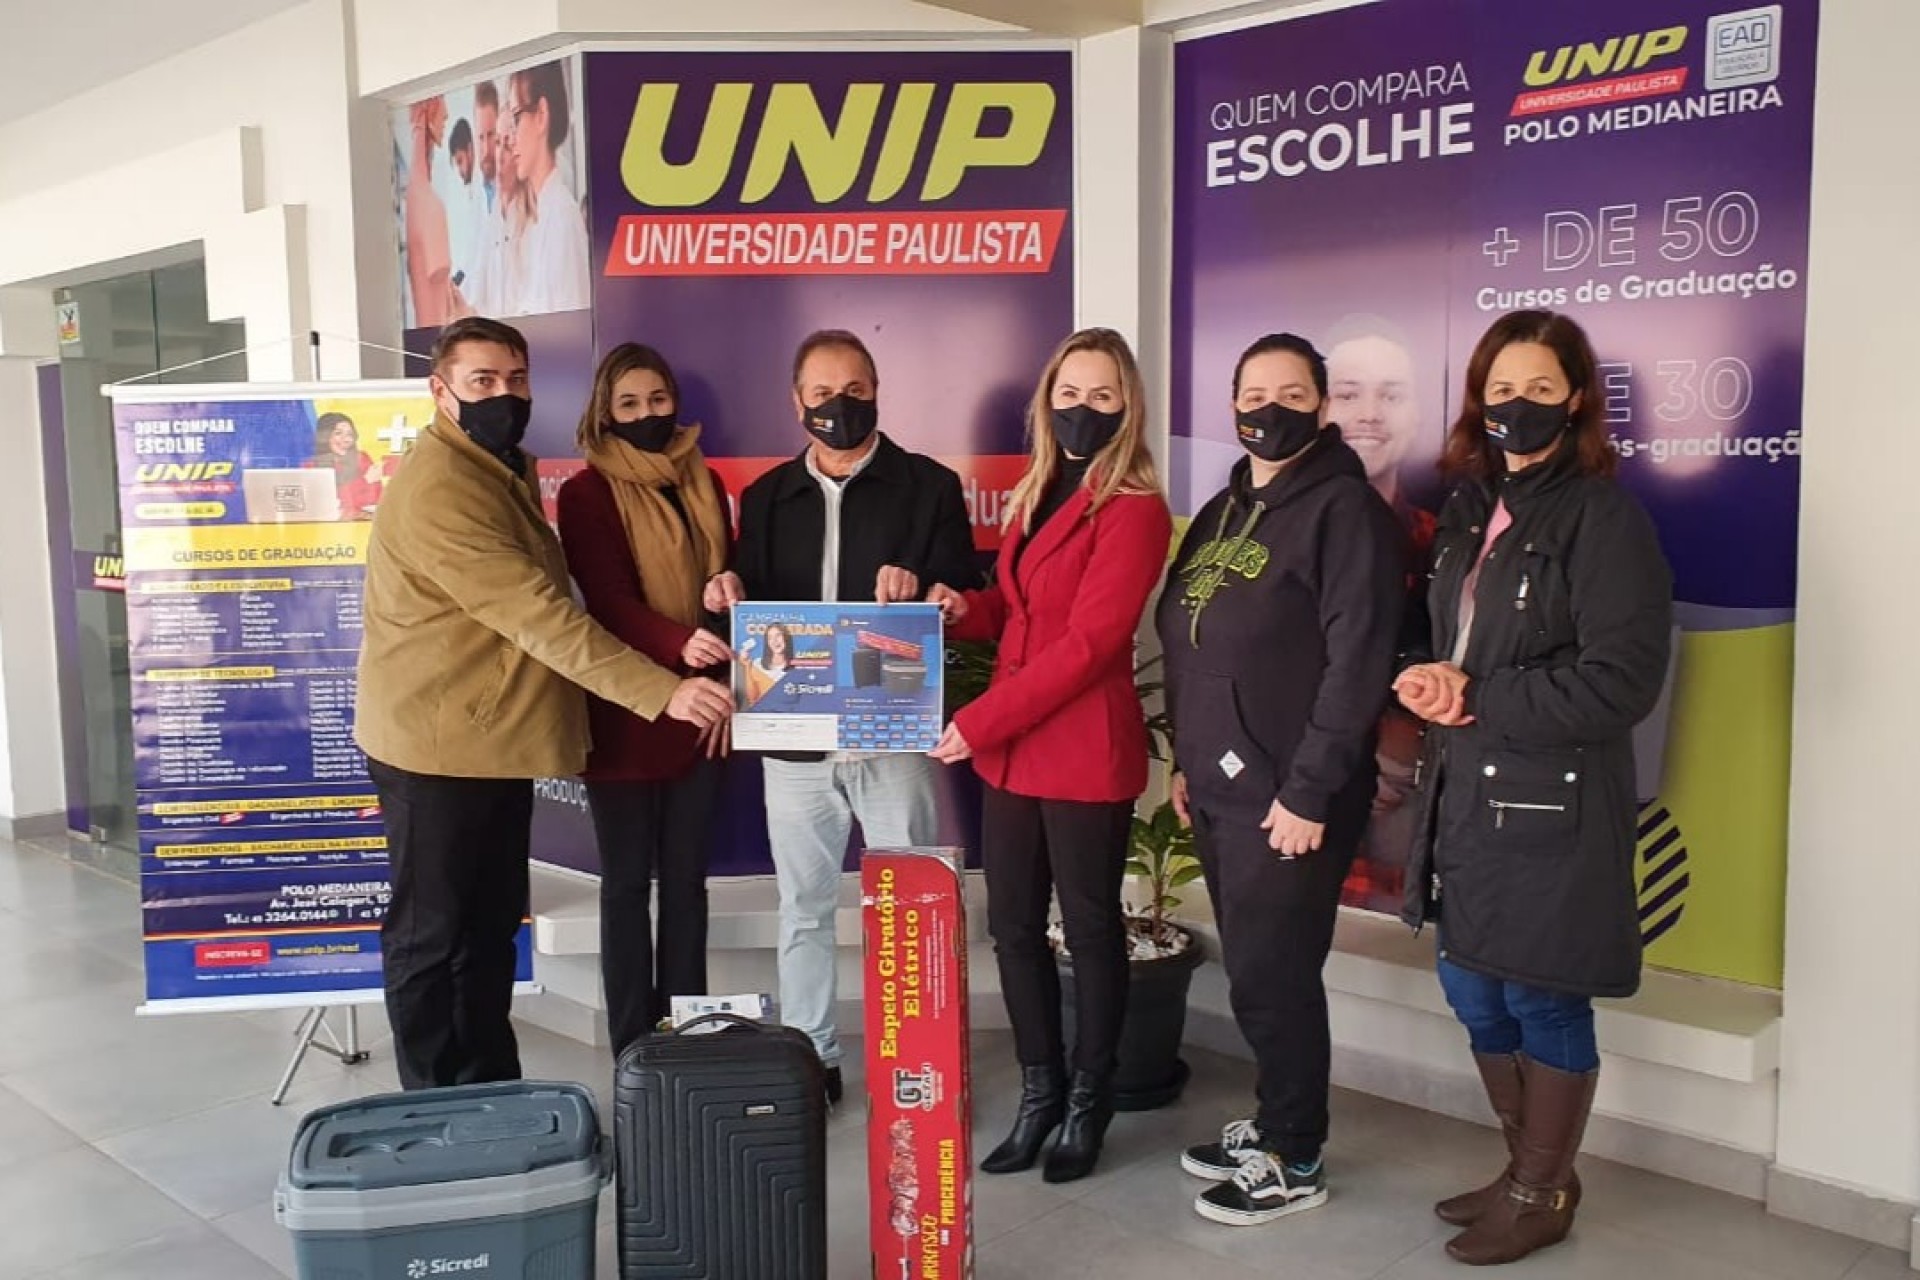 Unip Medianeira e Sicredi Vanguarda realizam campanha cooperada